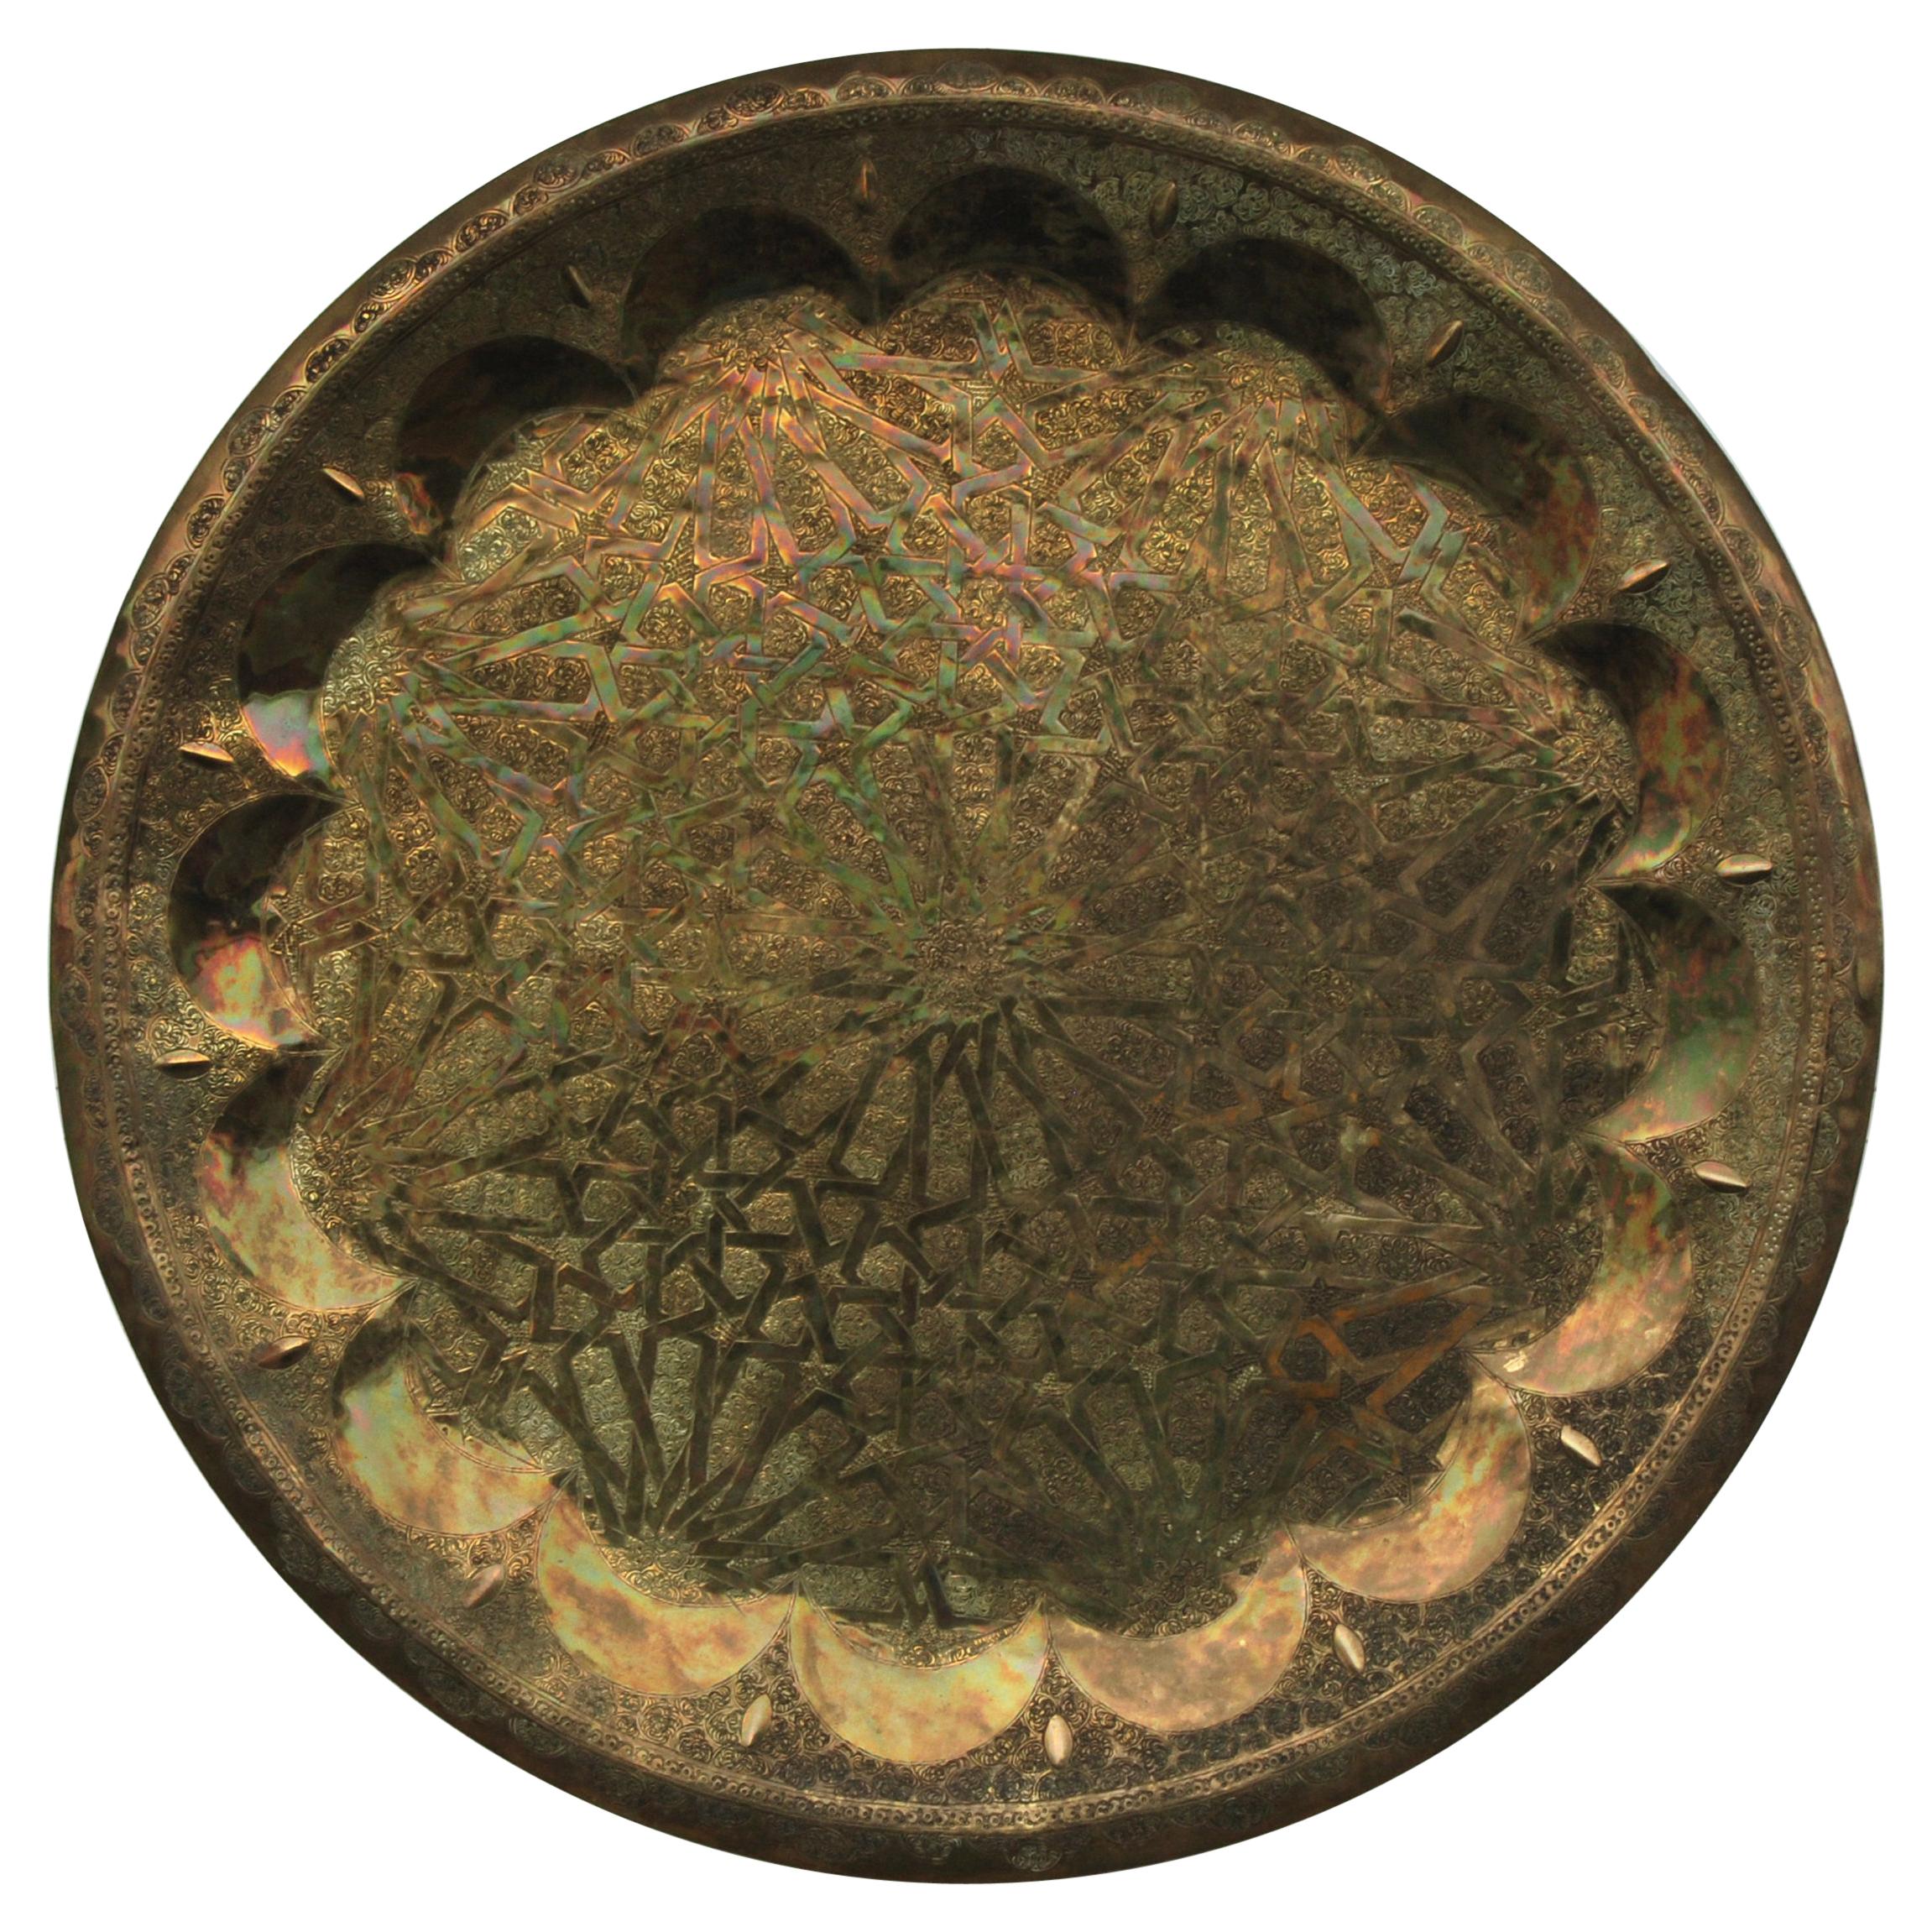 Islamic Hammered Brass Decorative Plate